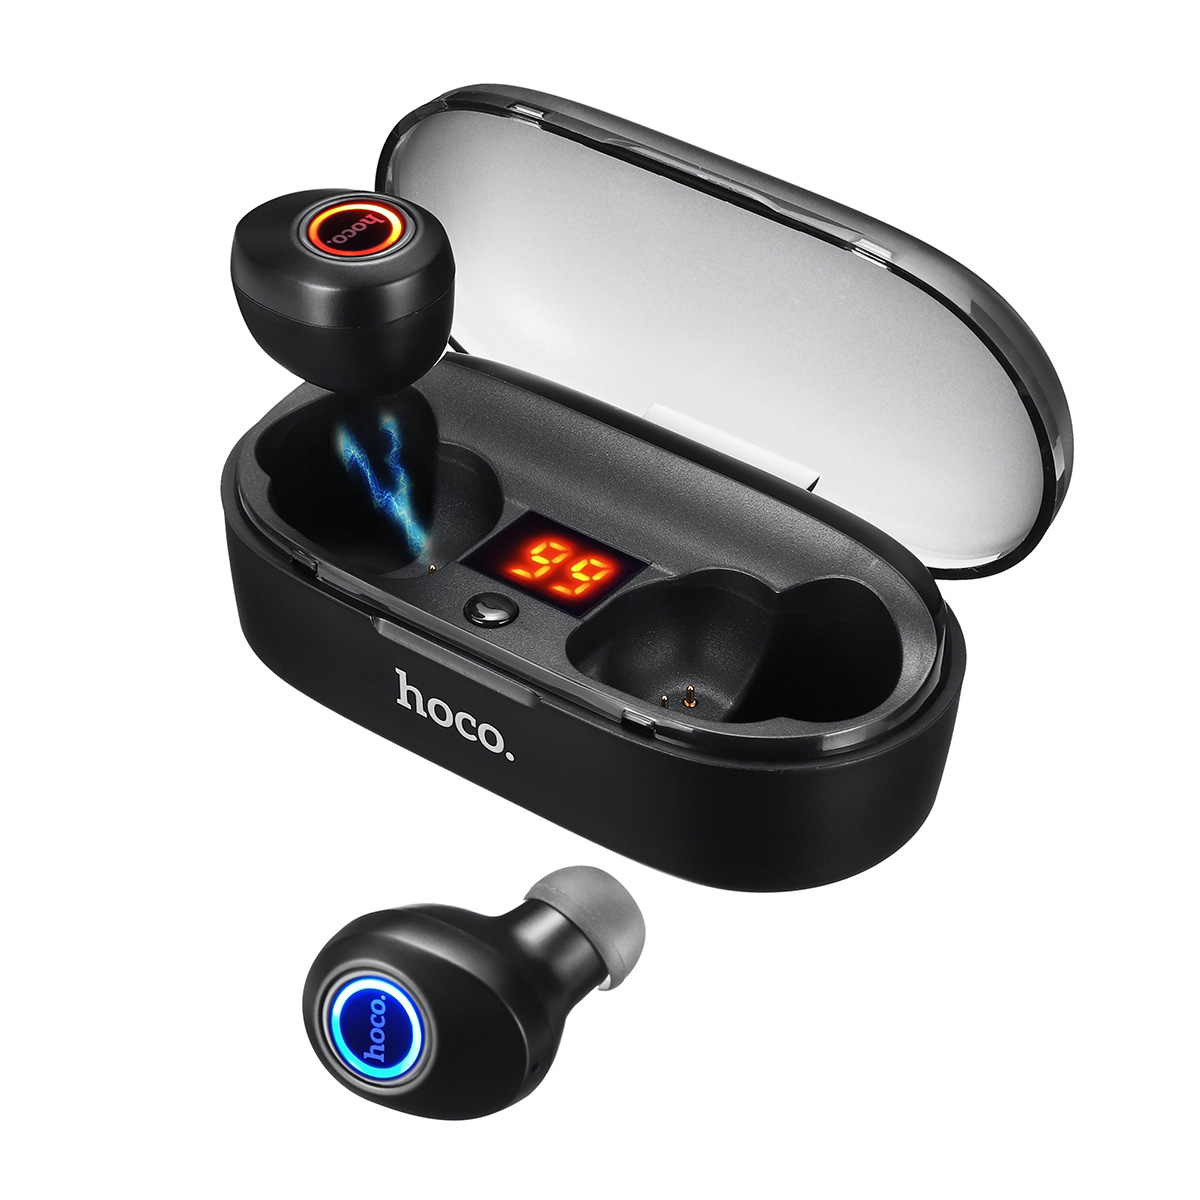 

[bluetooth 5.0] HOCO TWS HiFi Wireless Earbuds LED Display Bass Stereo CVC6.0 Noise Cancelling Sport Bilateral Calls Earphone Headphones